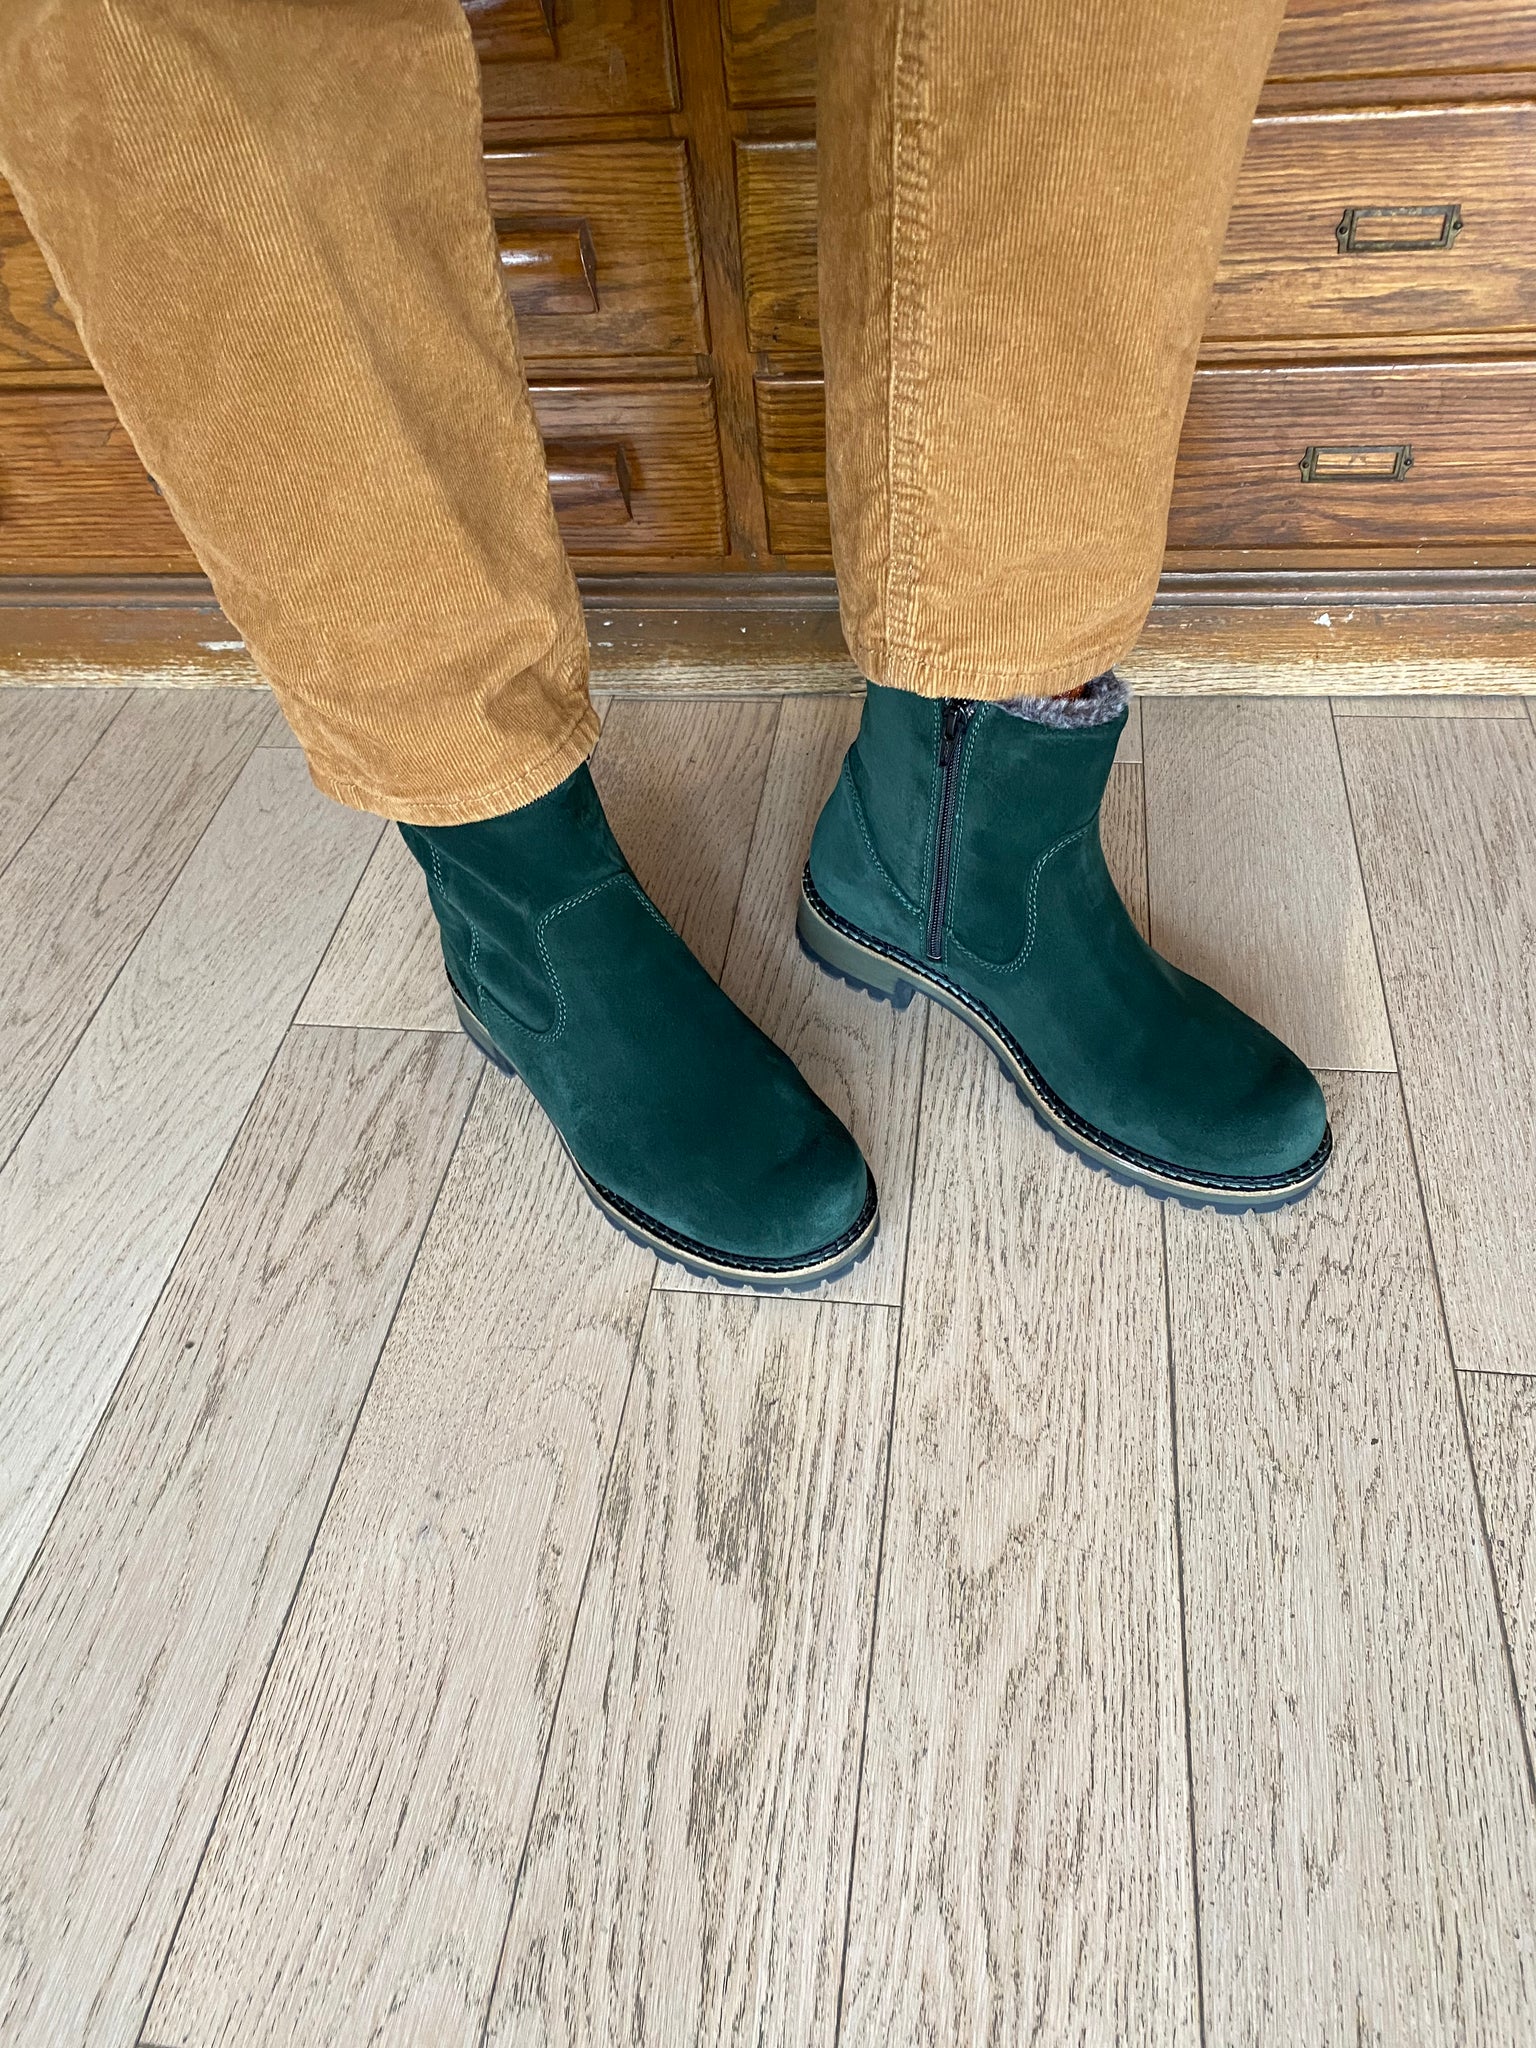 Bos & Co - Waterproof & Warm Ankle Boot in Emerald Green Suede